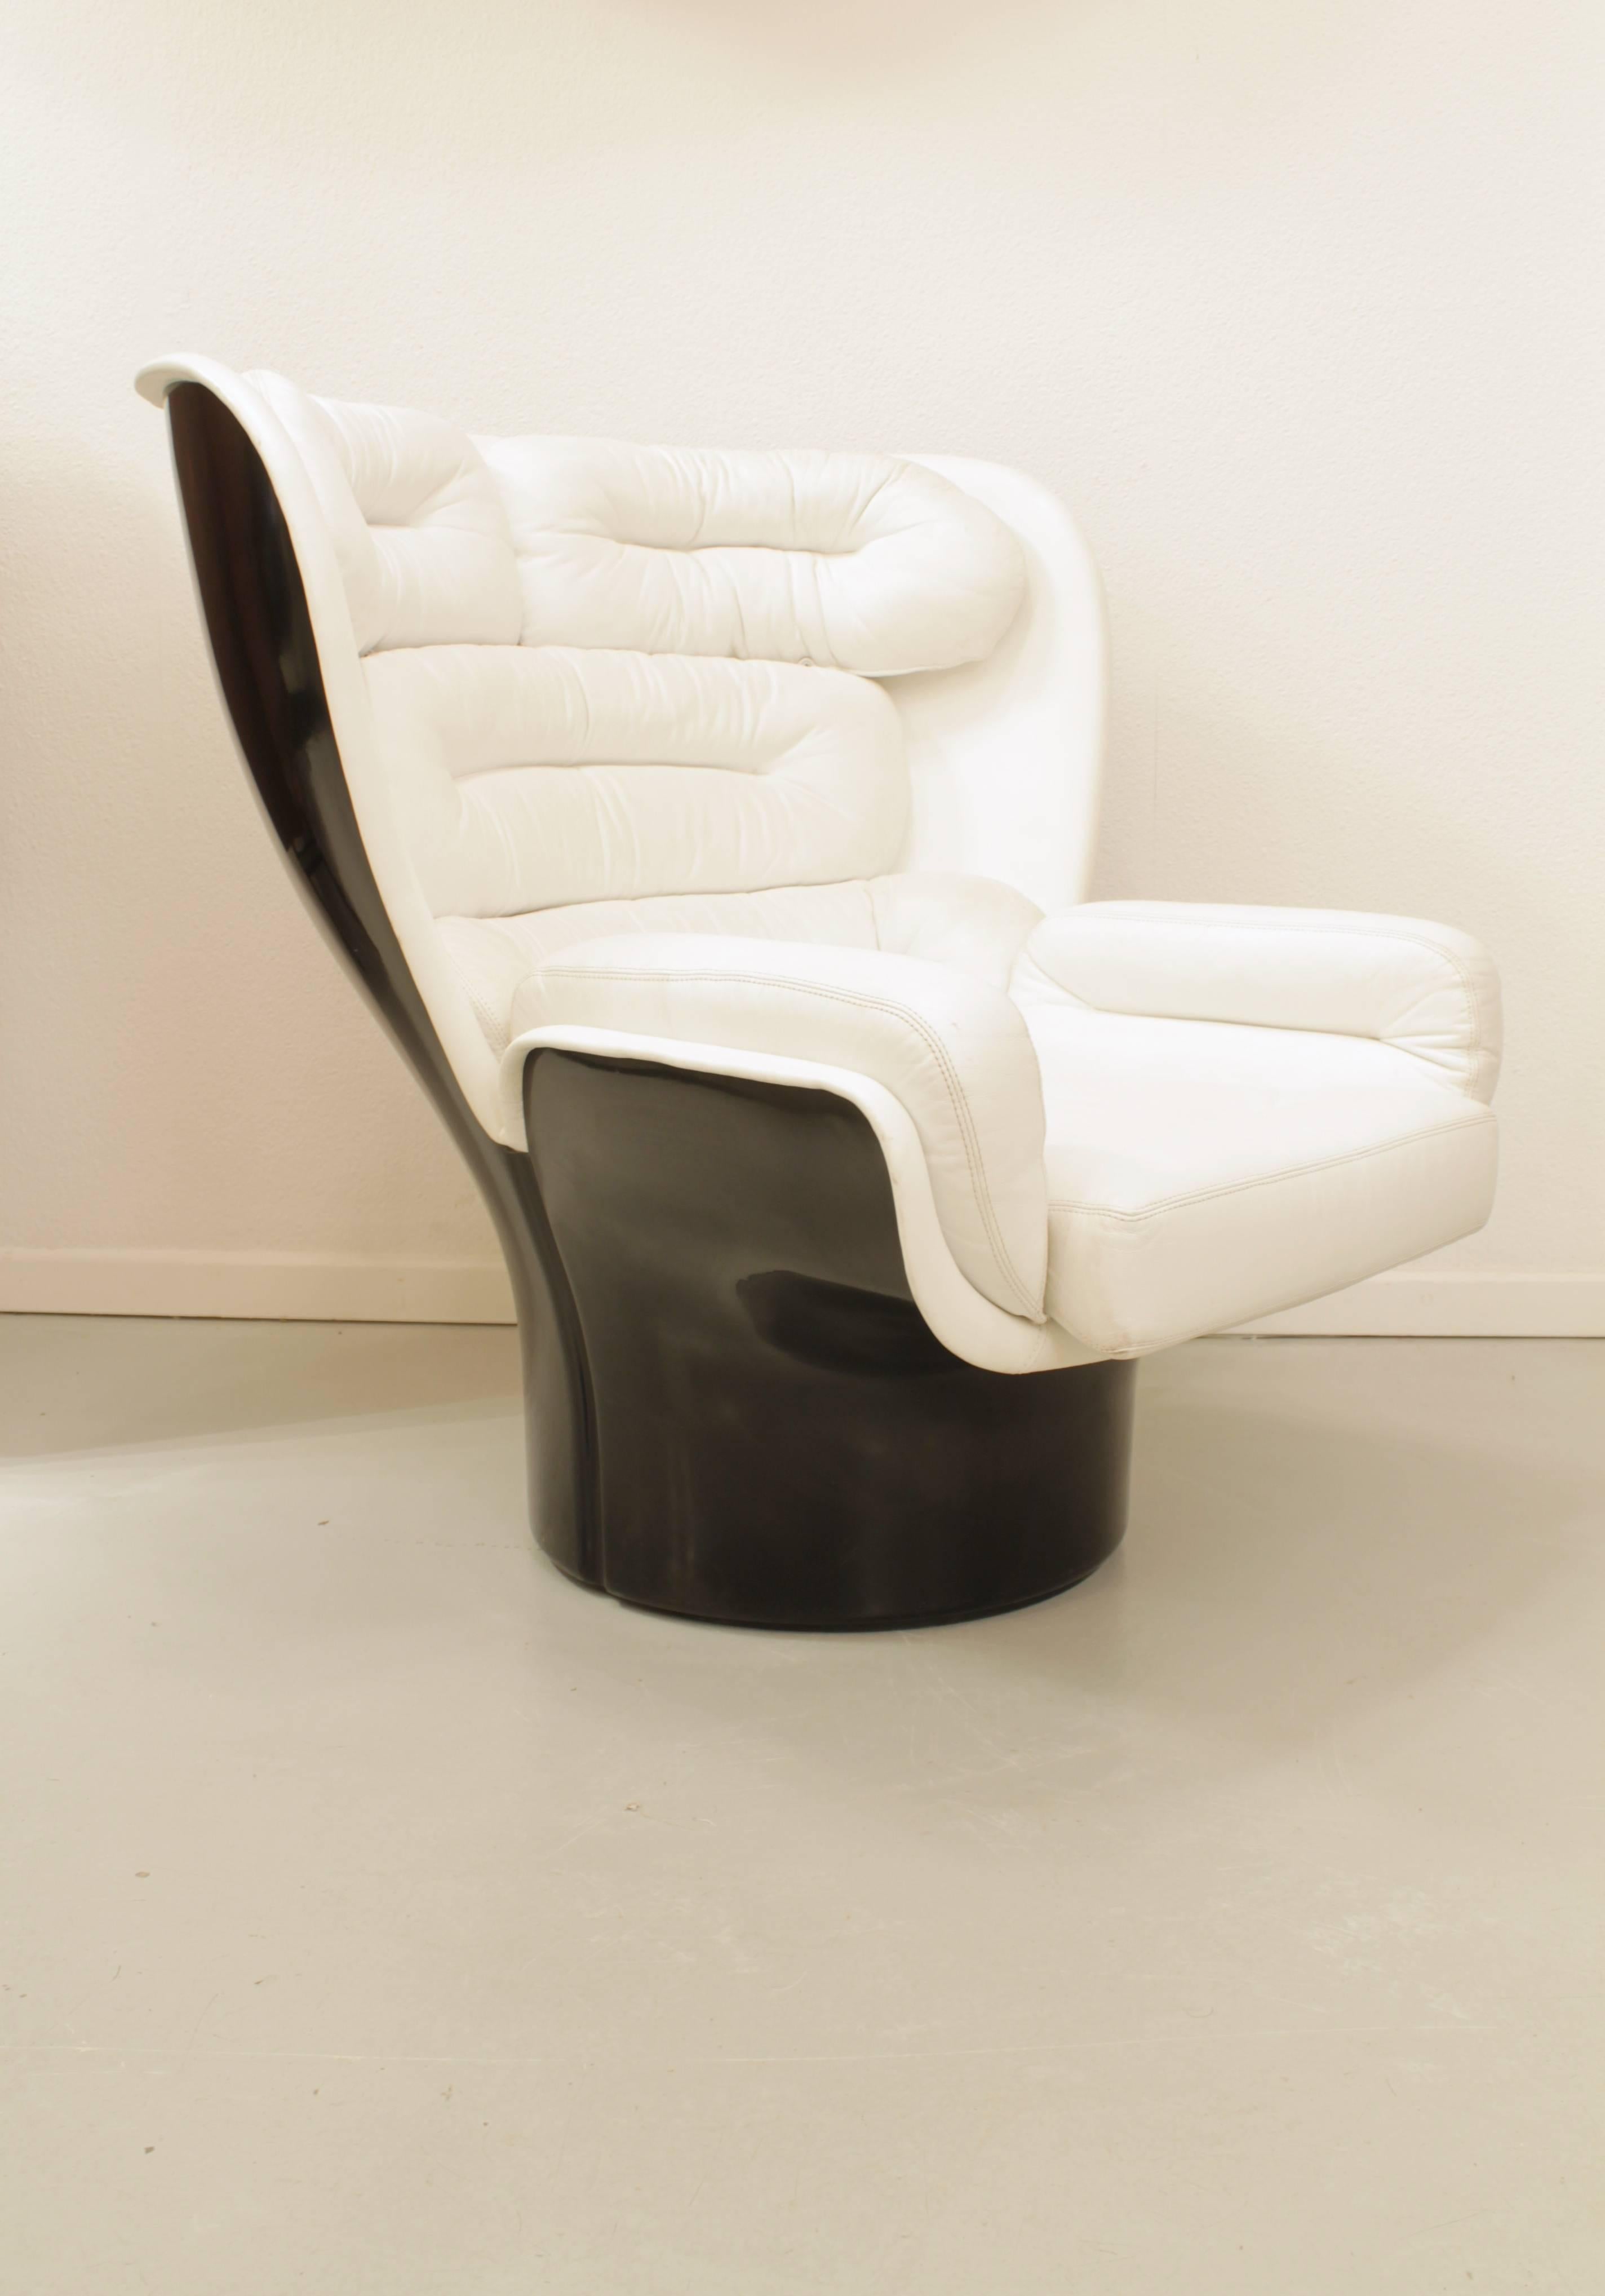 Italian Joe Colombo Elda Lounge Chair